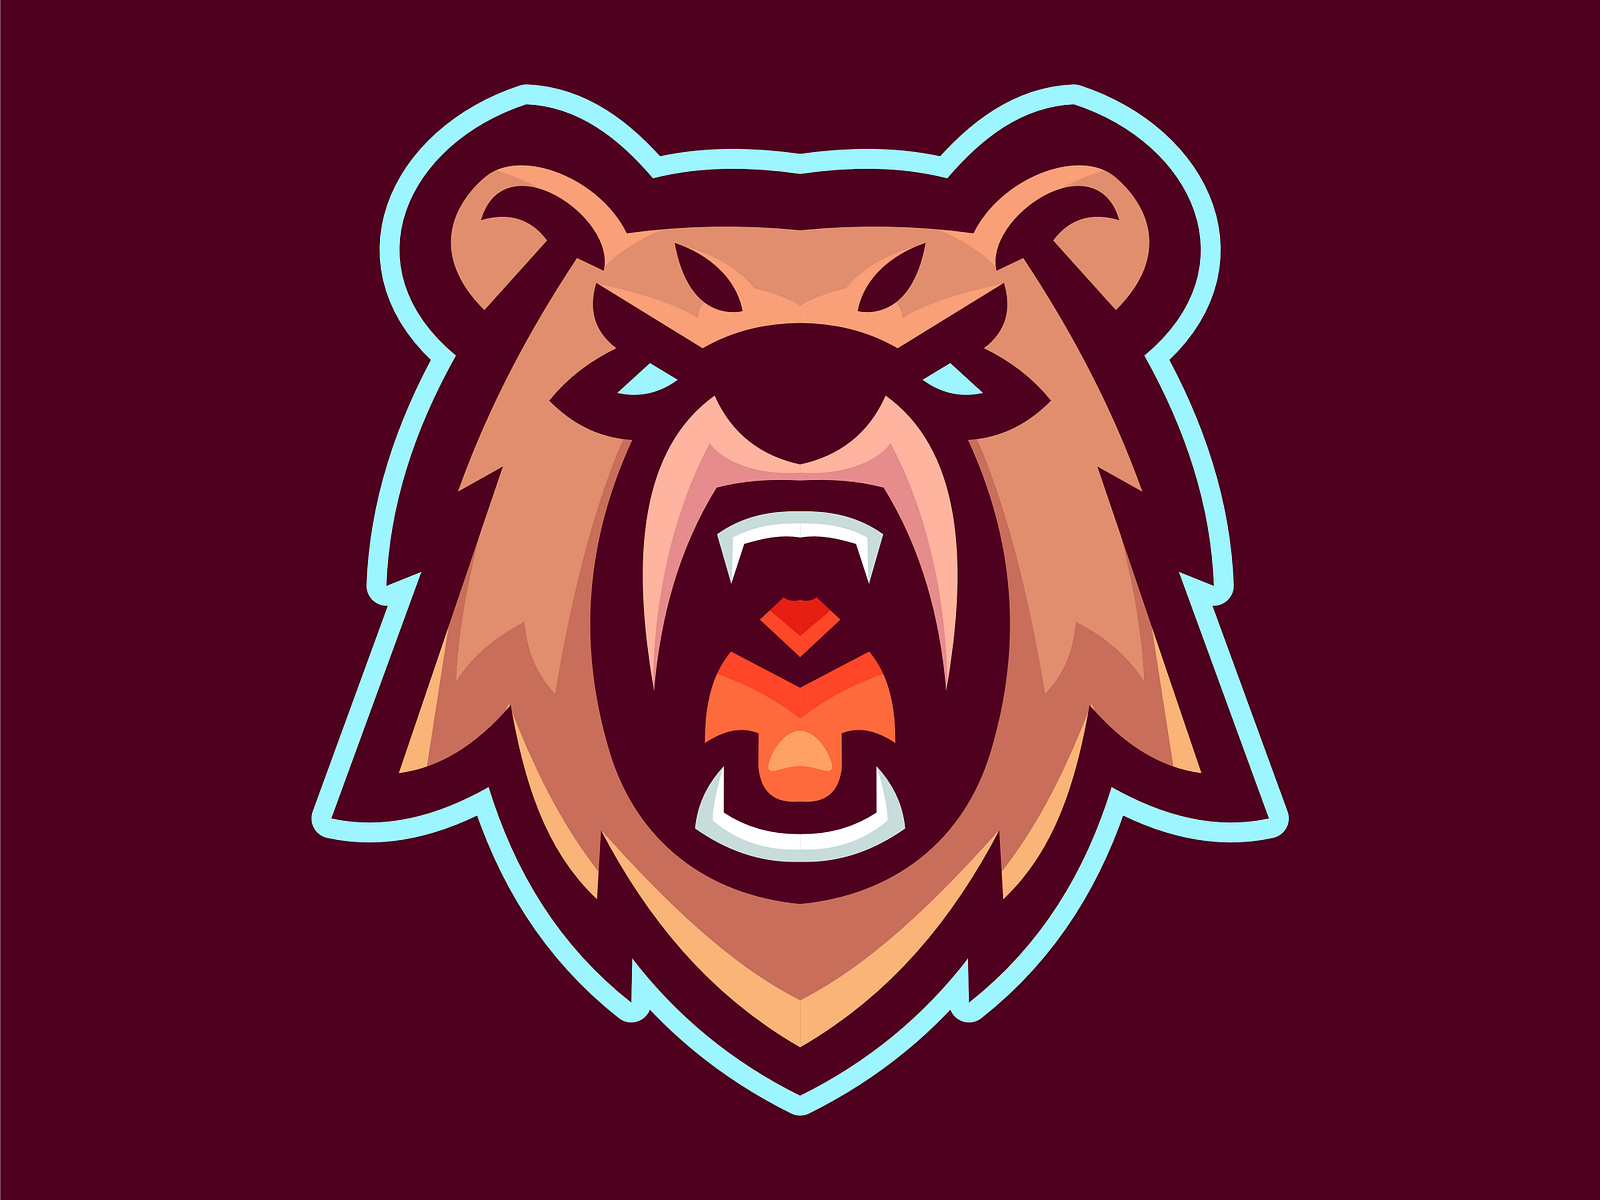 Roar Bear Mascot Logo by Ranusaban on Dribbble